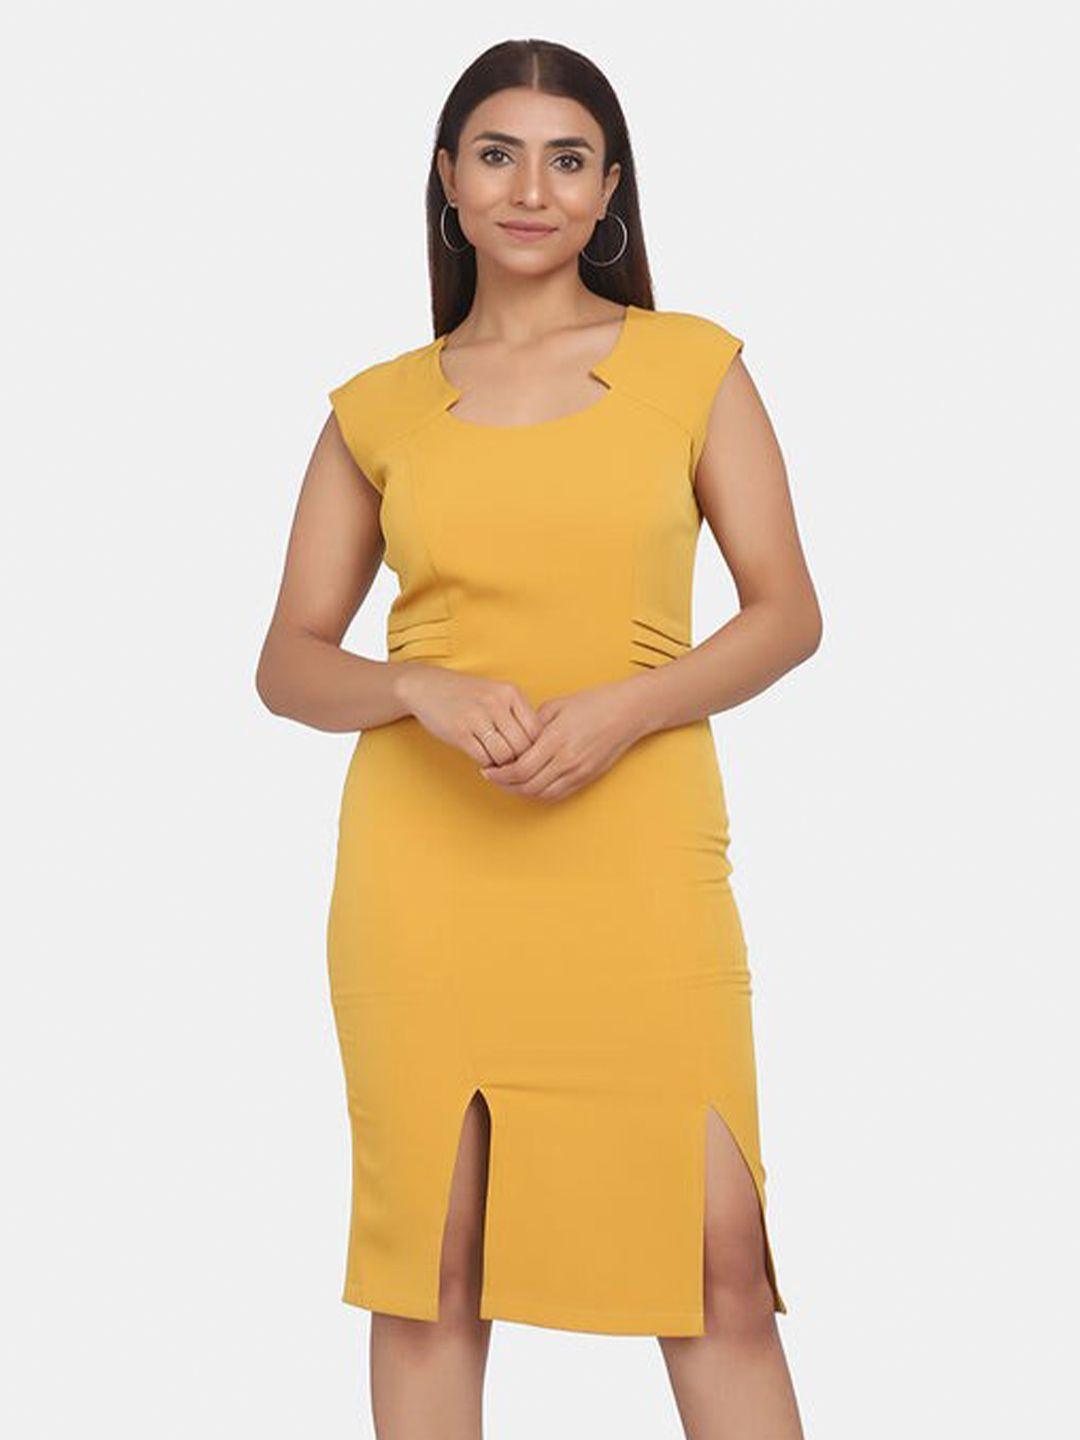 powersutra mustard yellow formal sheath dress